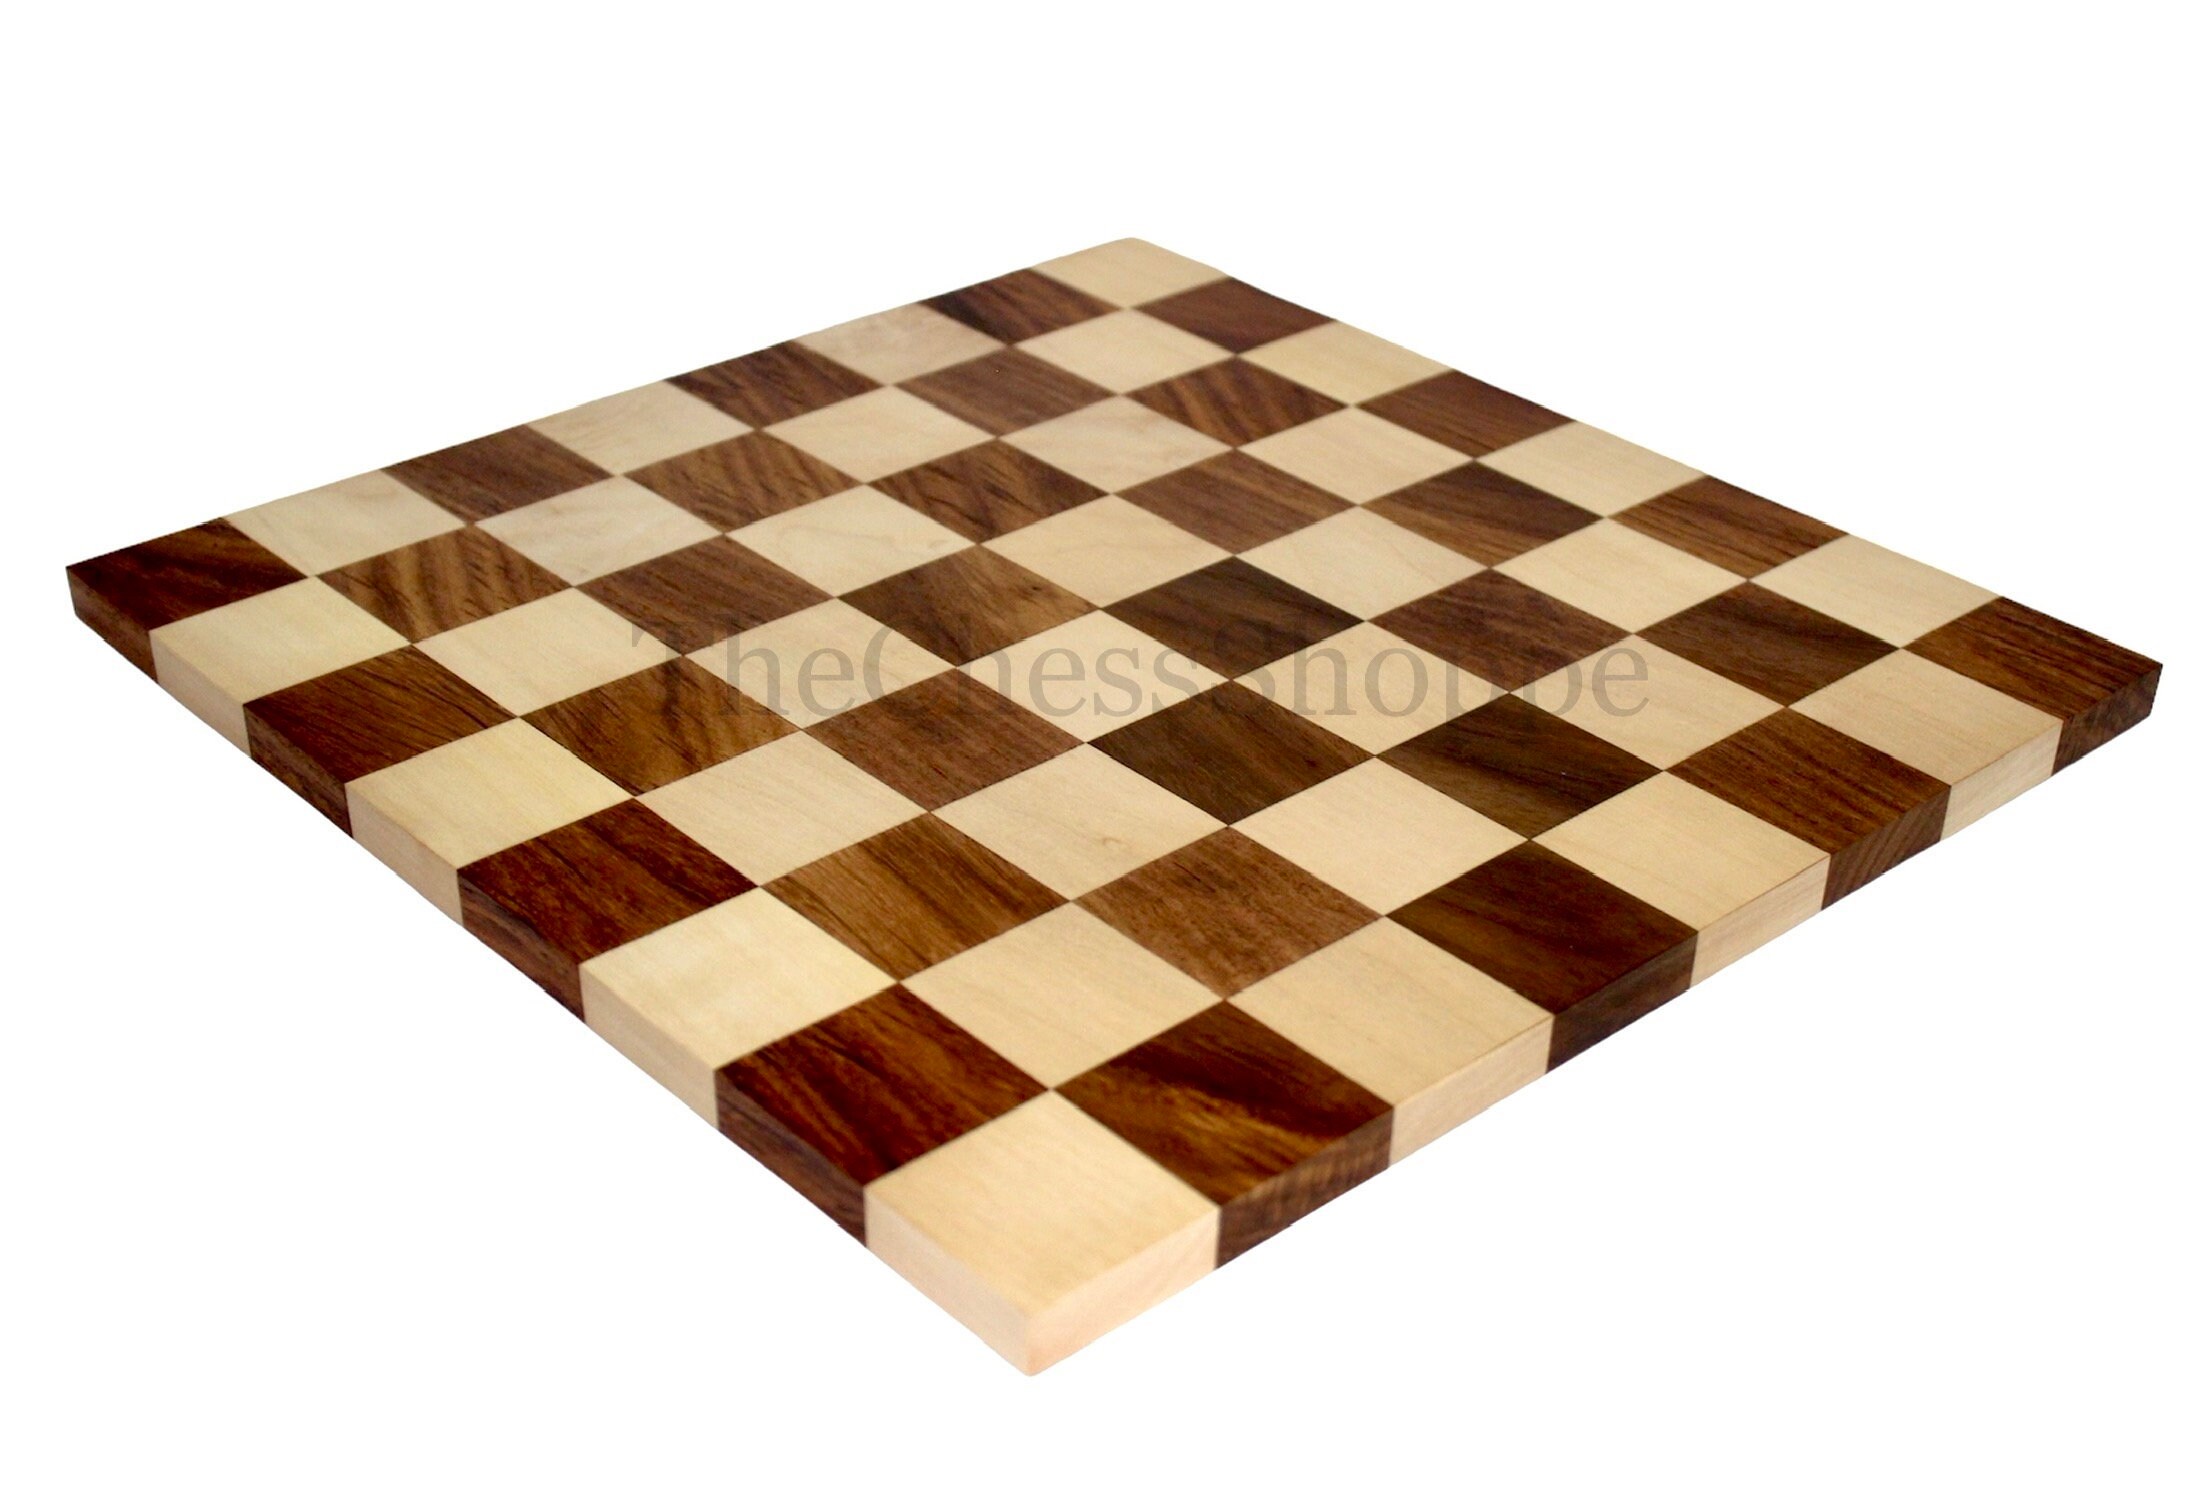 Green Chess Board 18x18 Inch, Chess Grandmaster Williams Chess